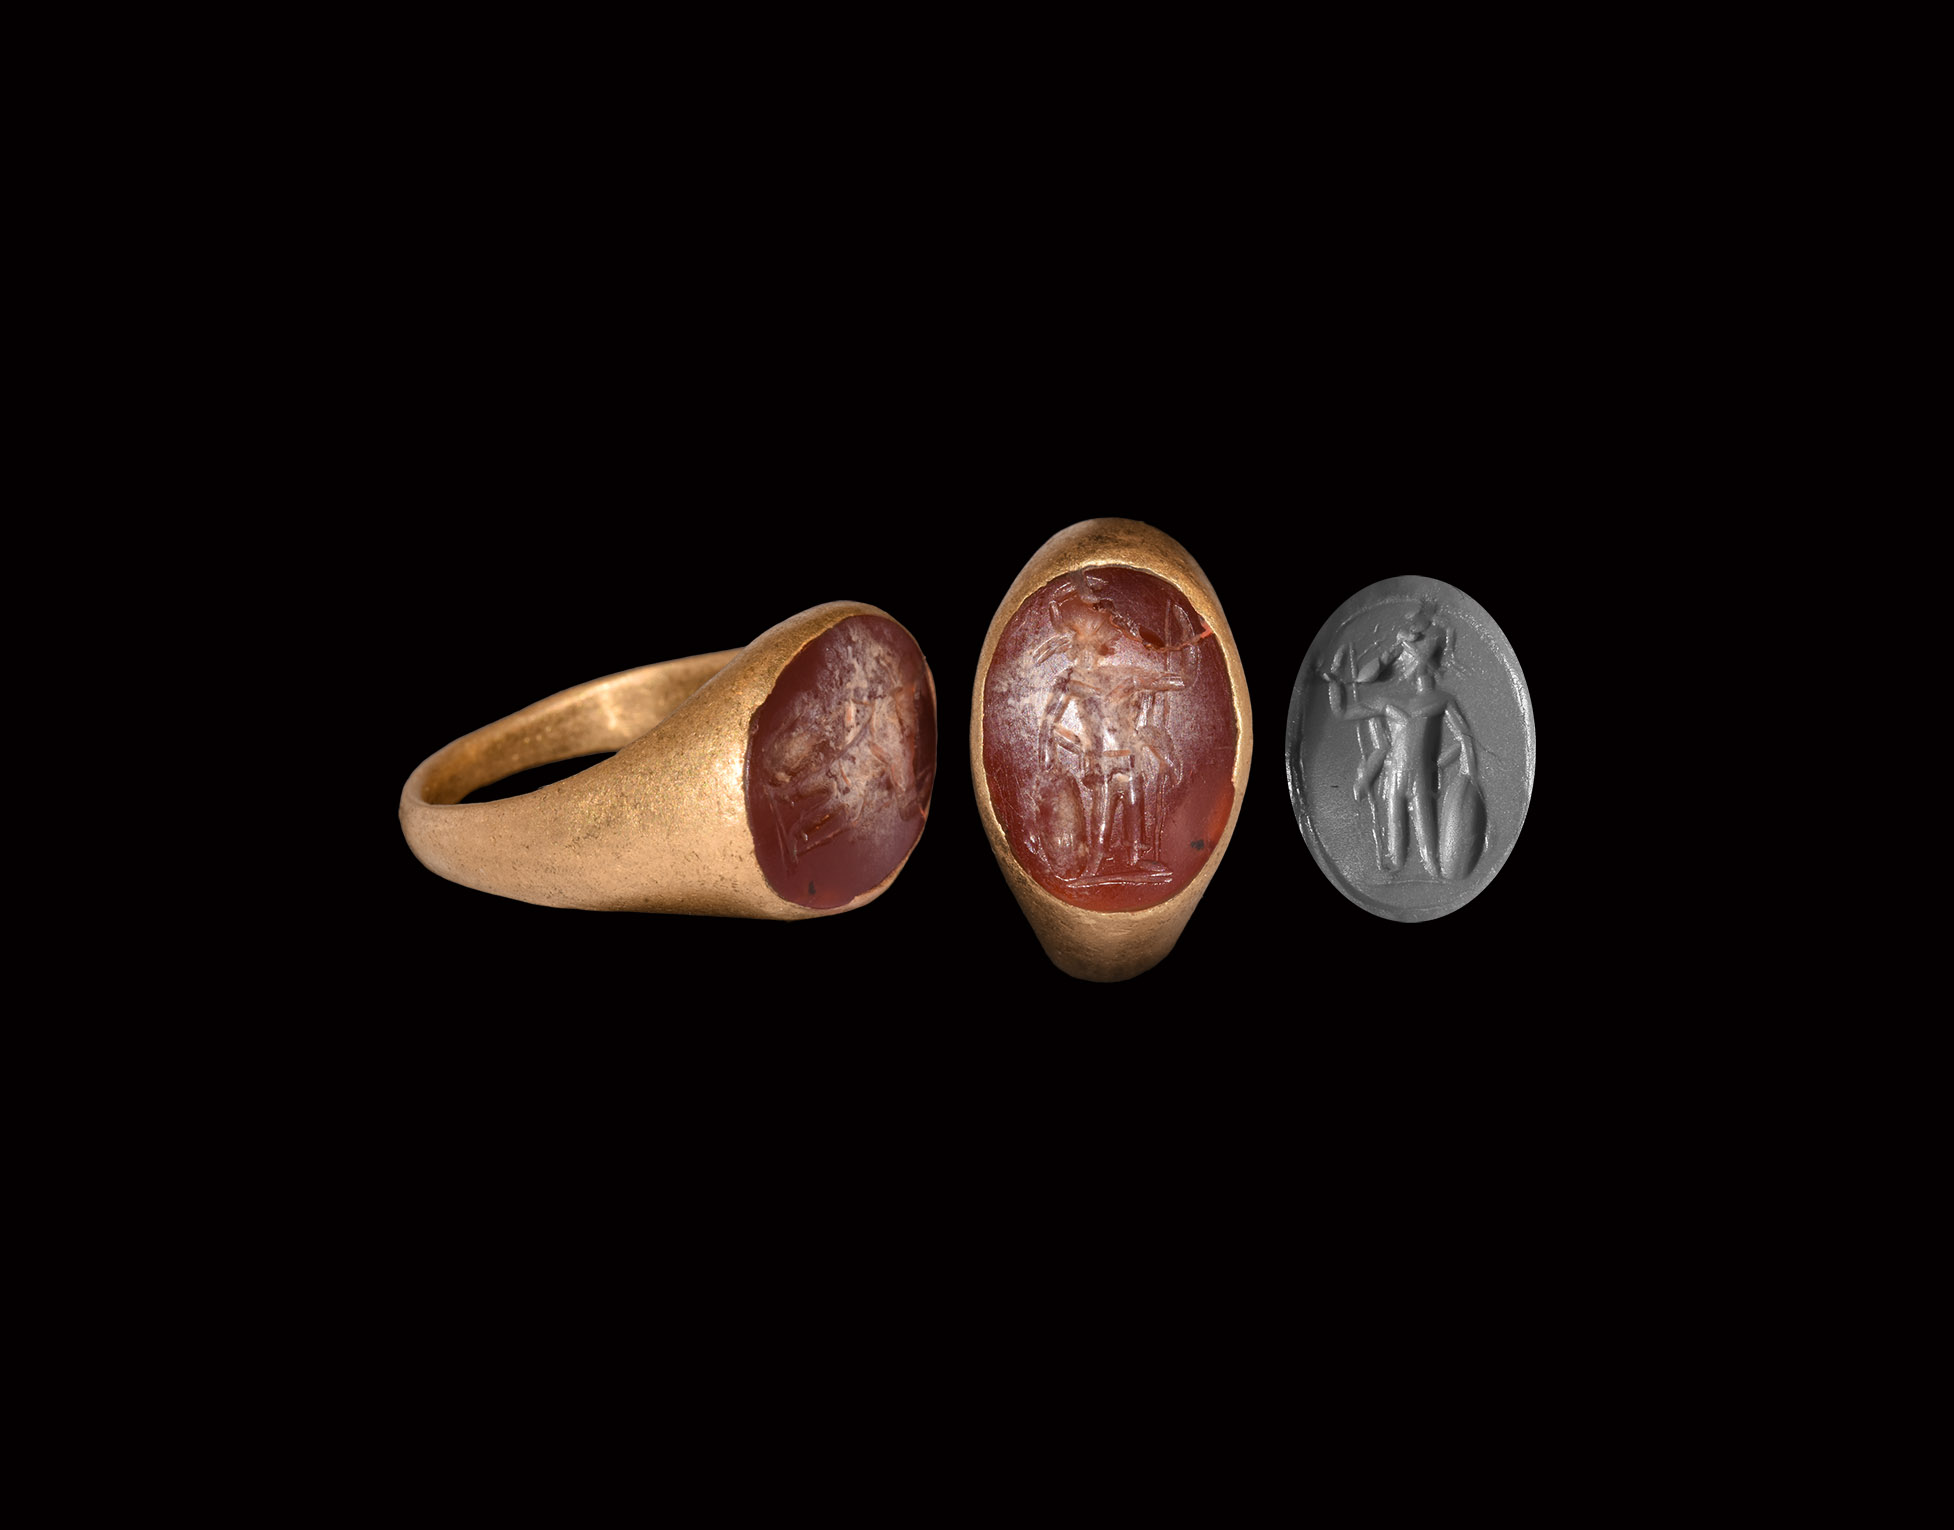 Roman Gold Ring with Mars Gemstone